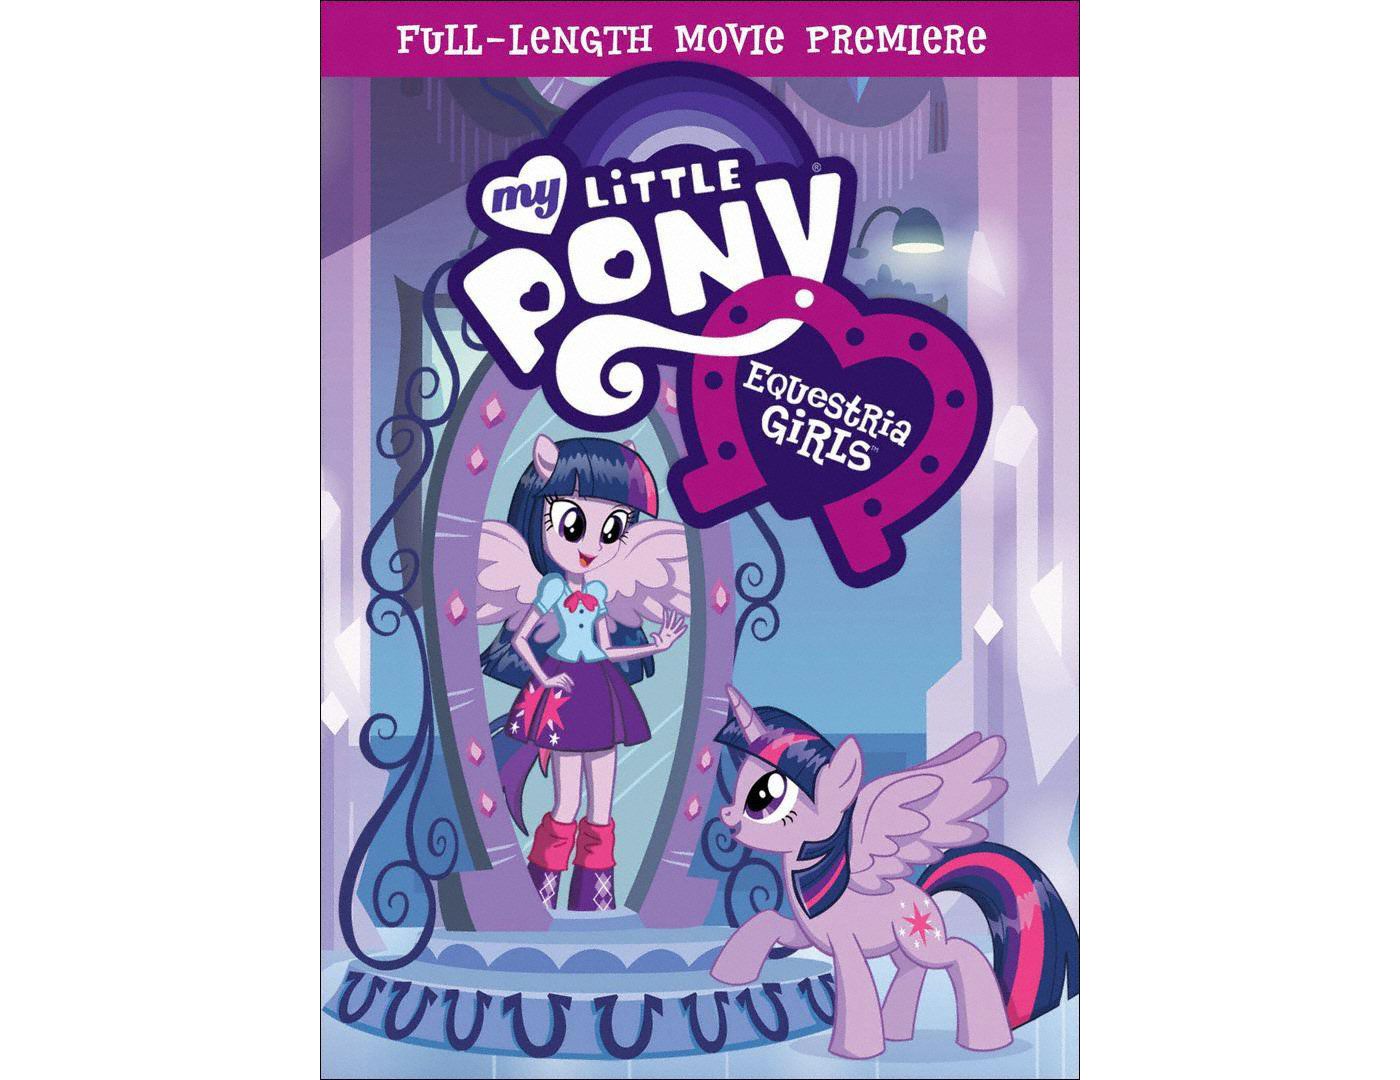 My Little Pony: Equestria Girls DVD